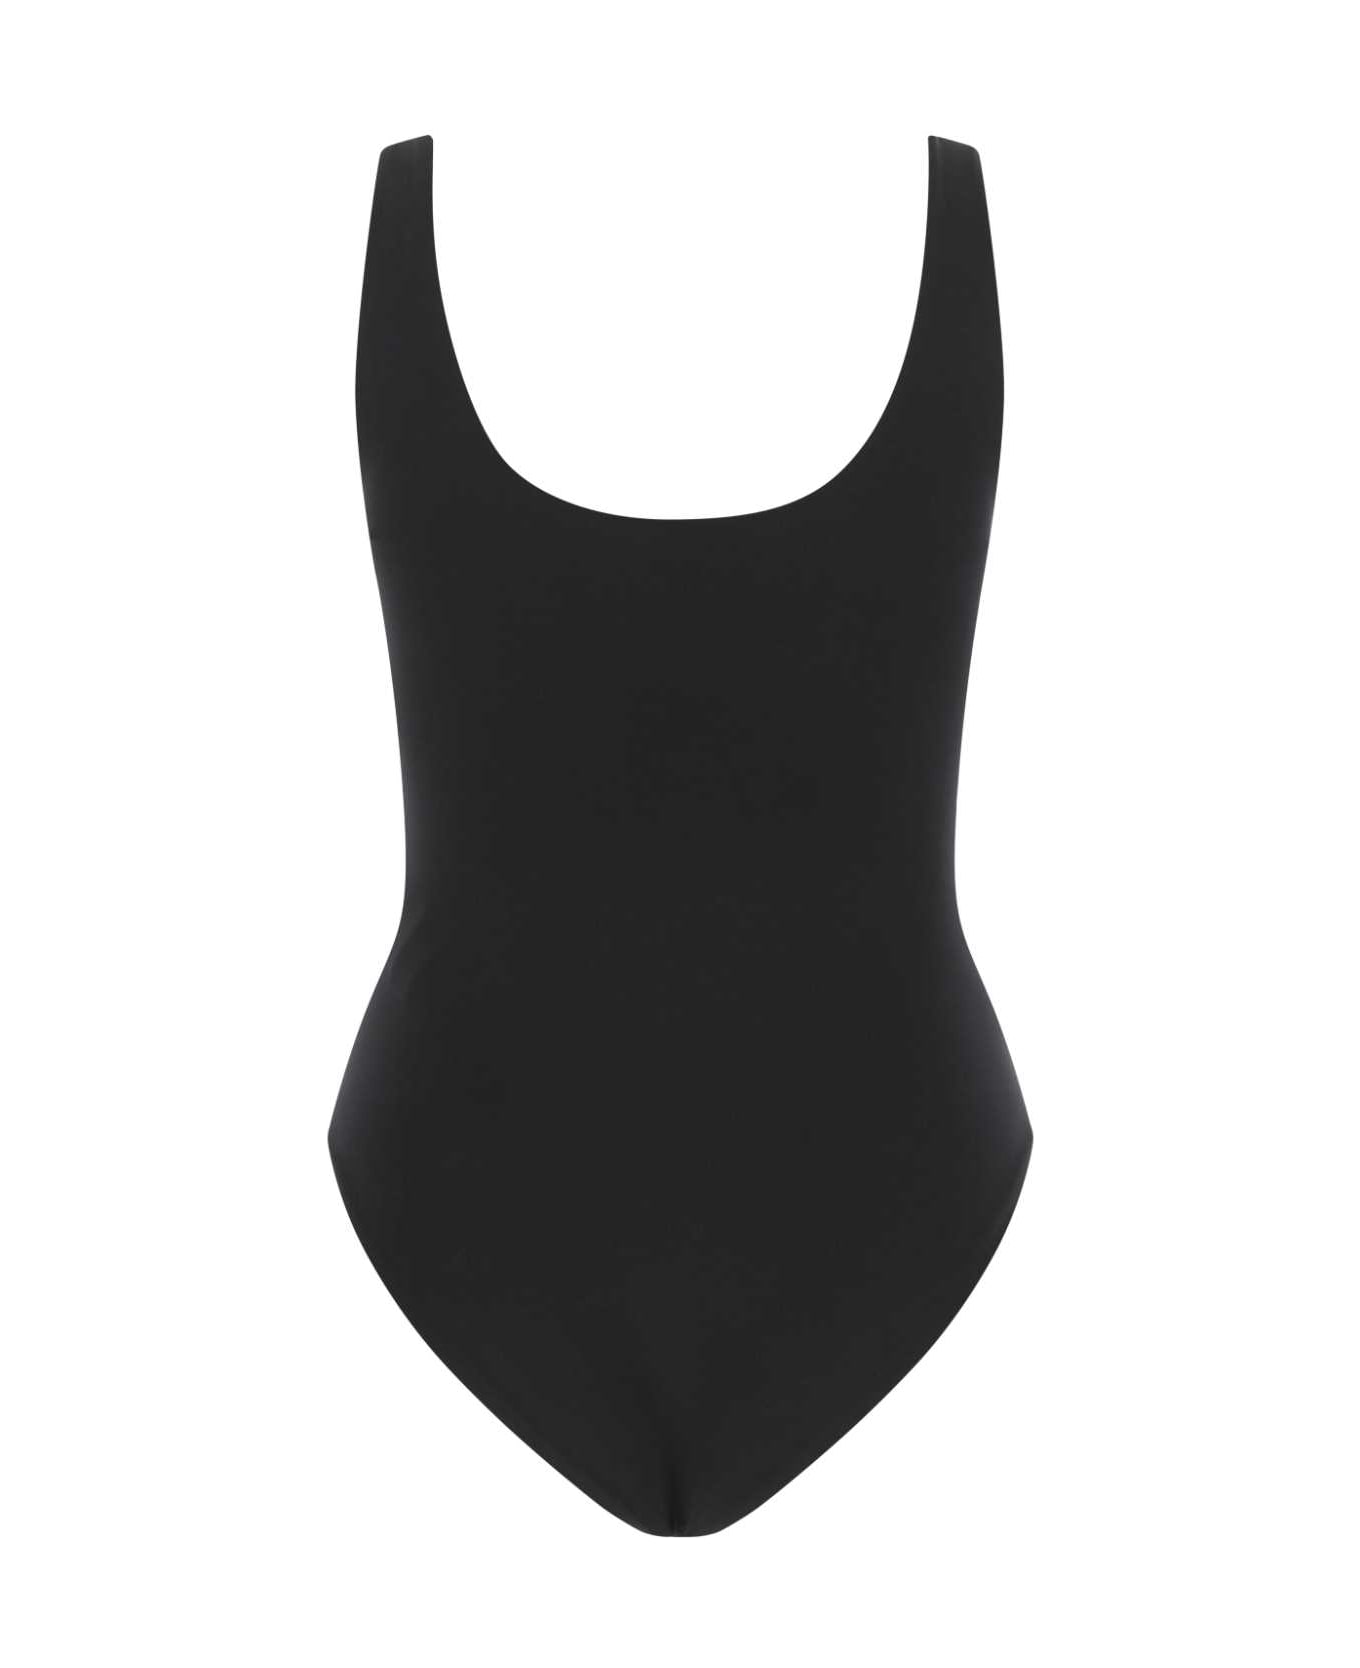 Saint Laurent Black Stretch Nylon Swimsuit - 1000 水着